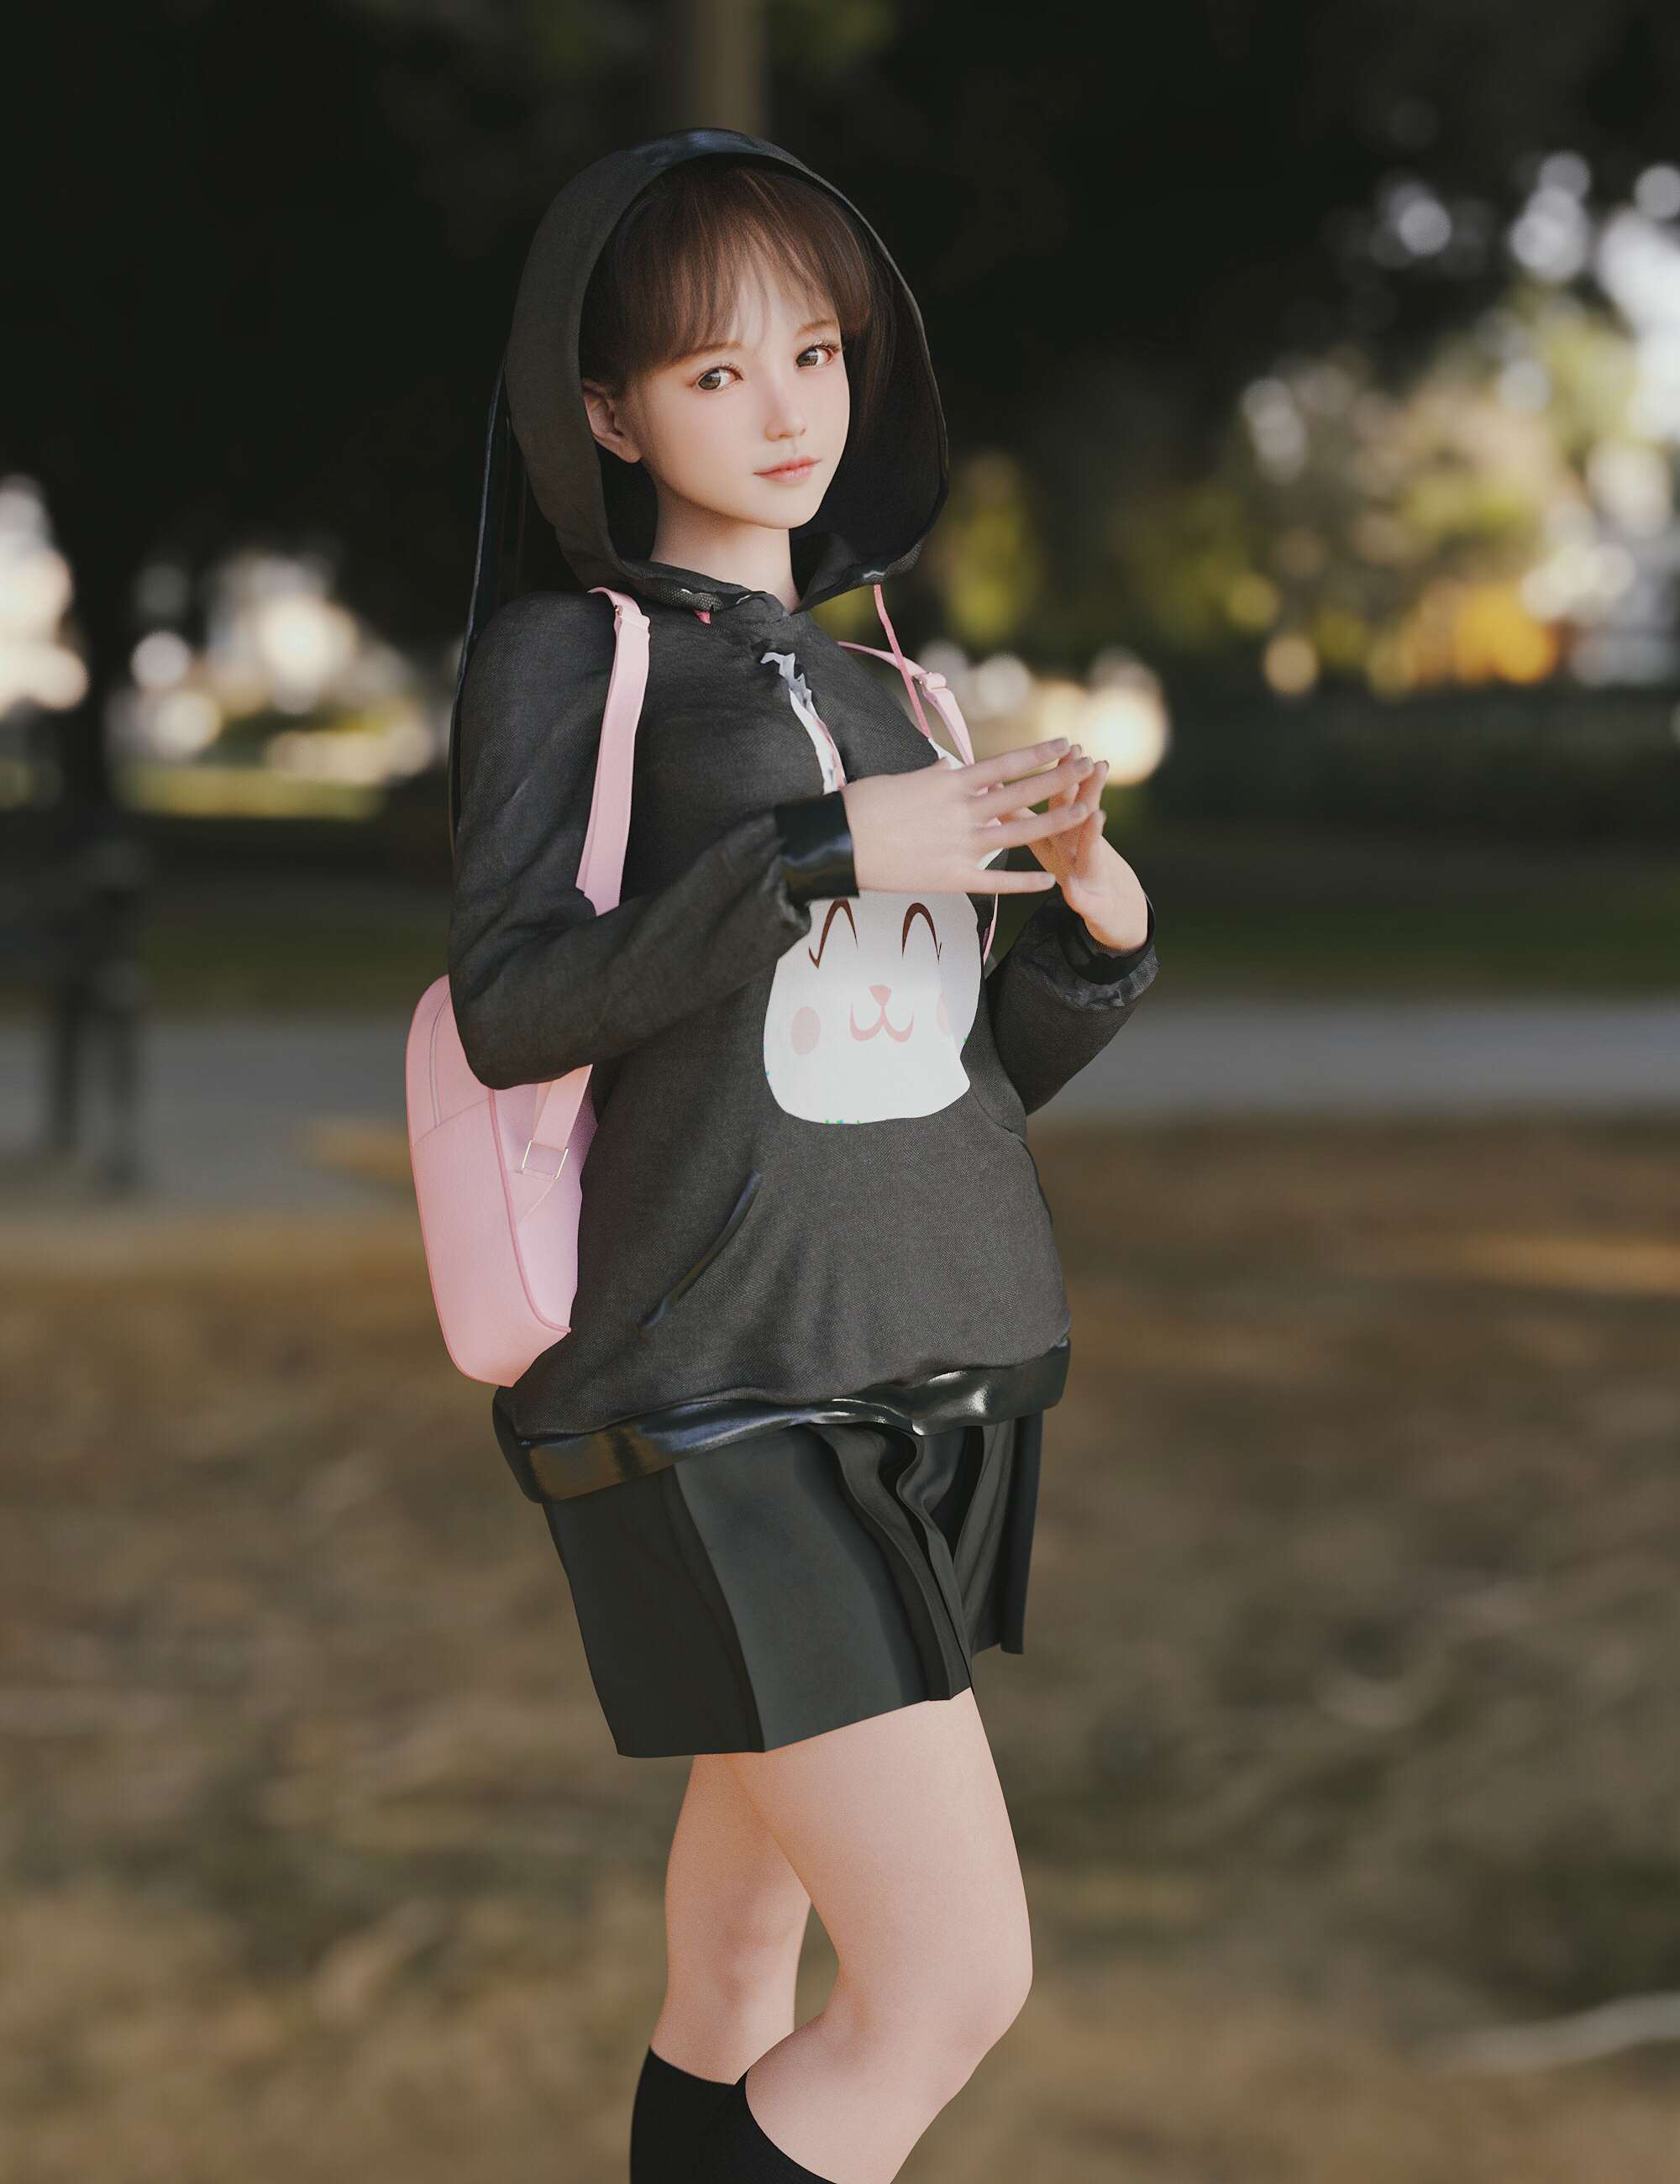 General 2000x2600 fantasy girl CGI Asian backpacks hoods